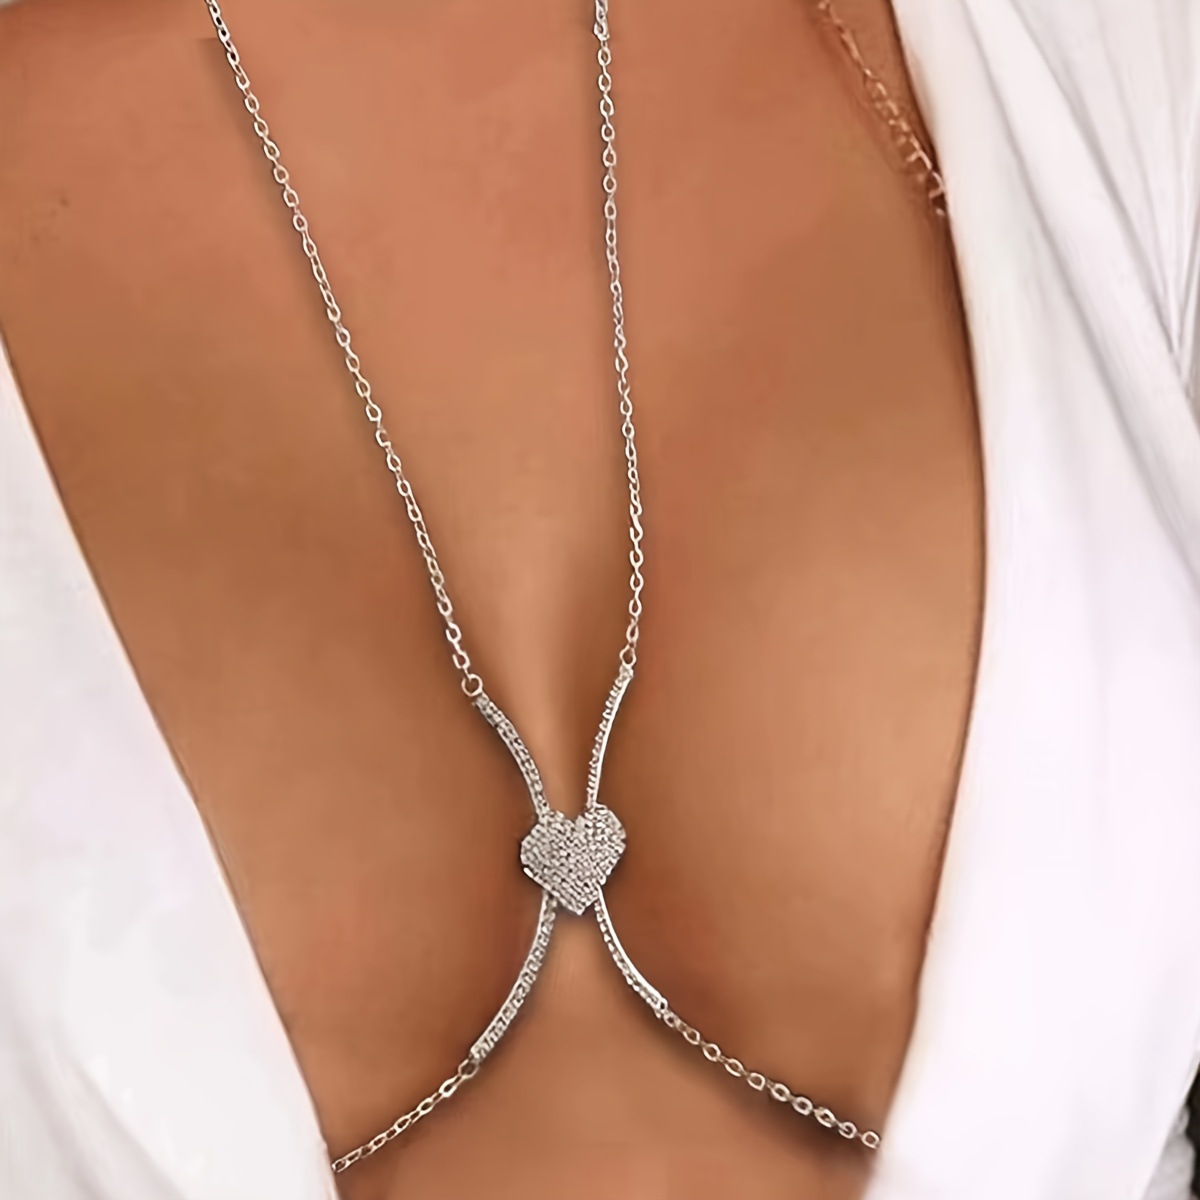 Bling Rhinestone Love Heart Chest Chain Harness Bra Necklace